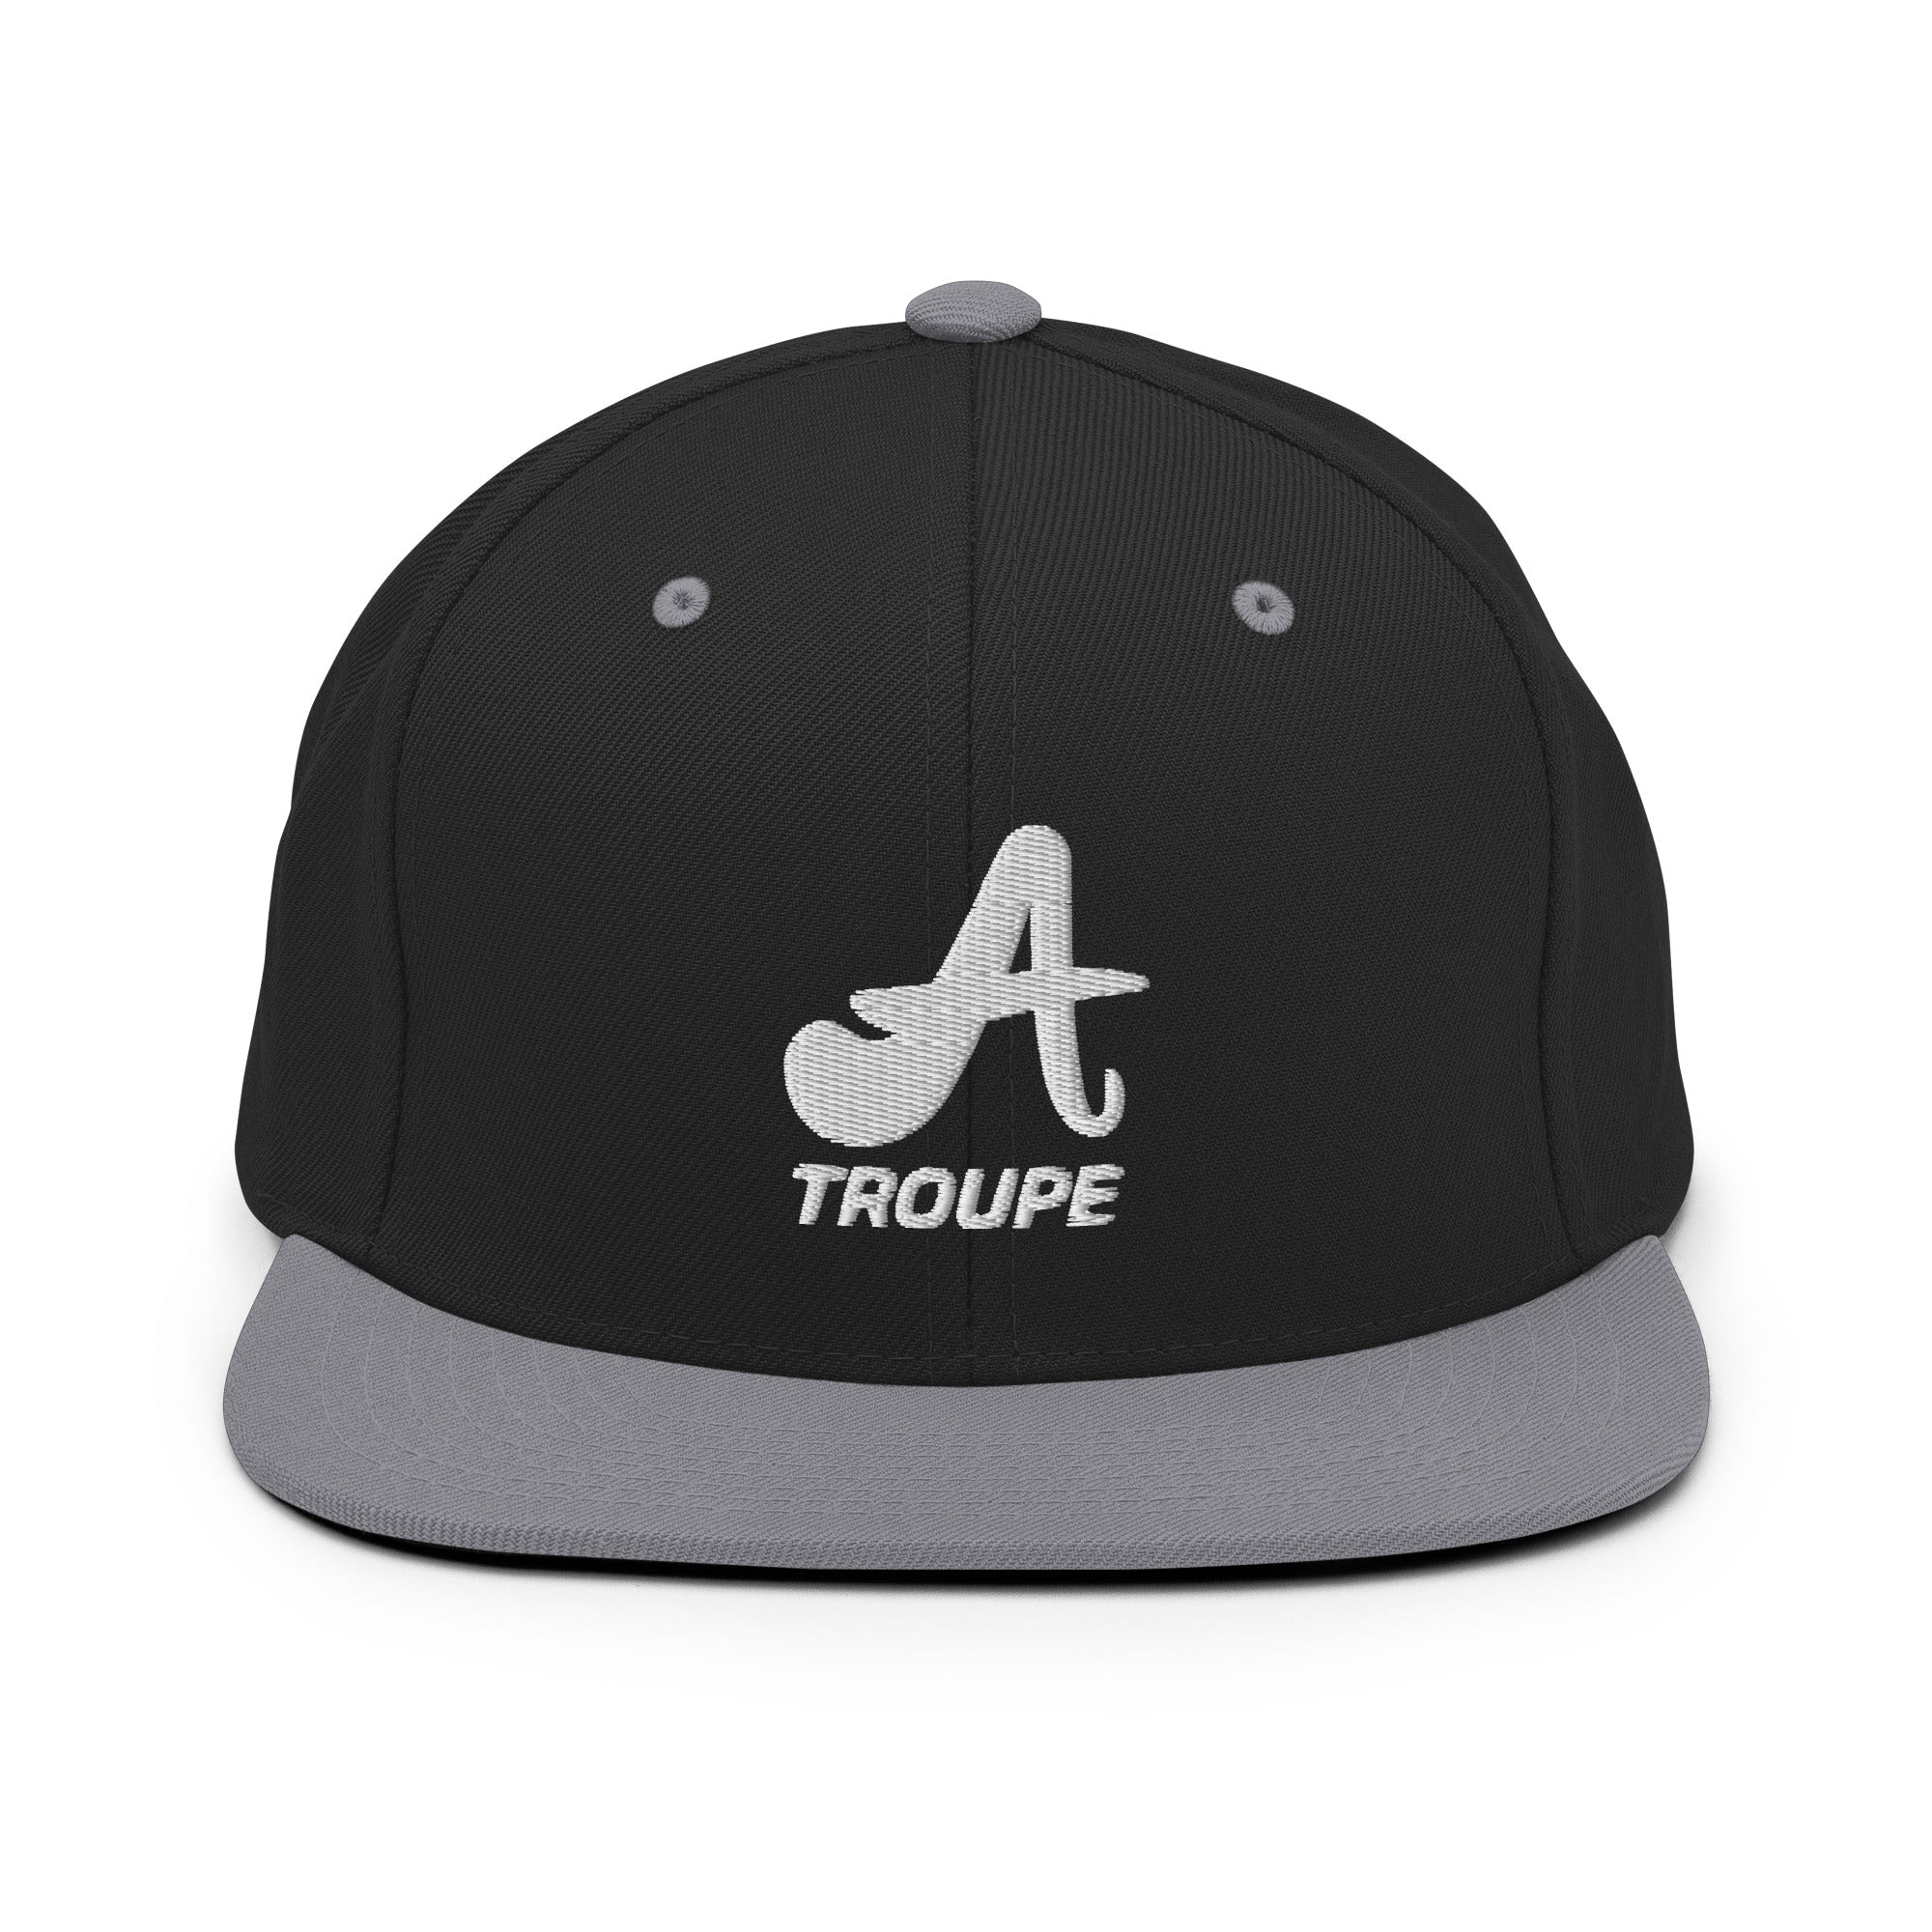 A Troupe Snapback Hat